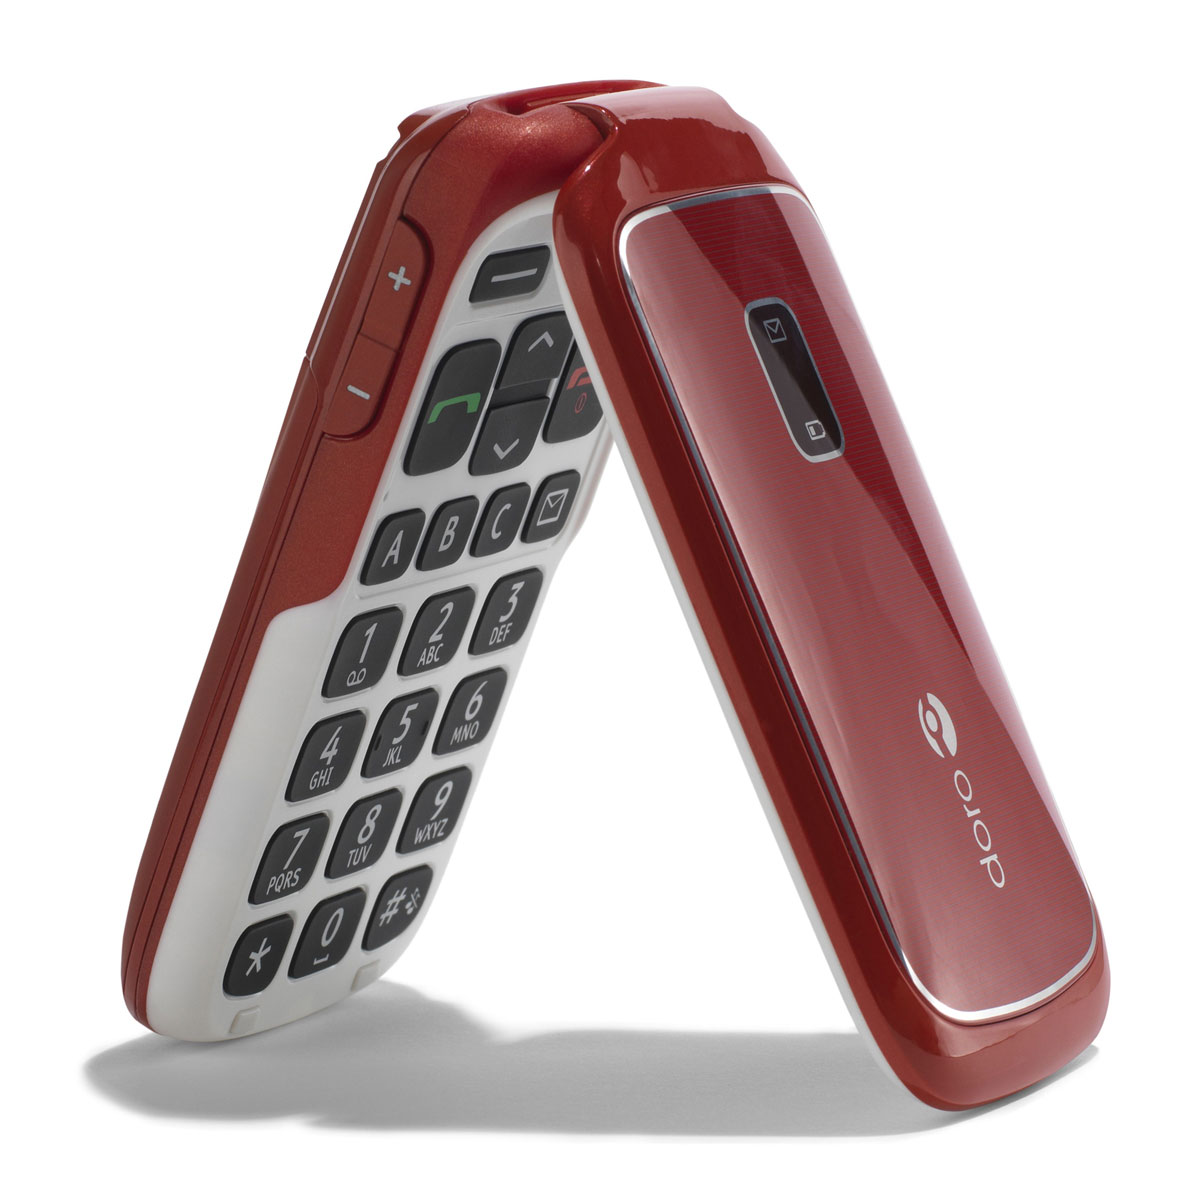 Doro PhoneEasy 610gsm Rouge Mobile & smartphone Doro sur